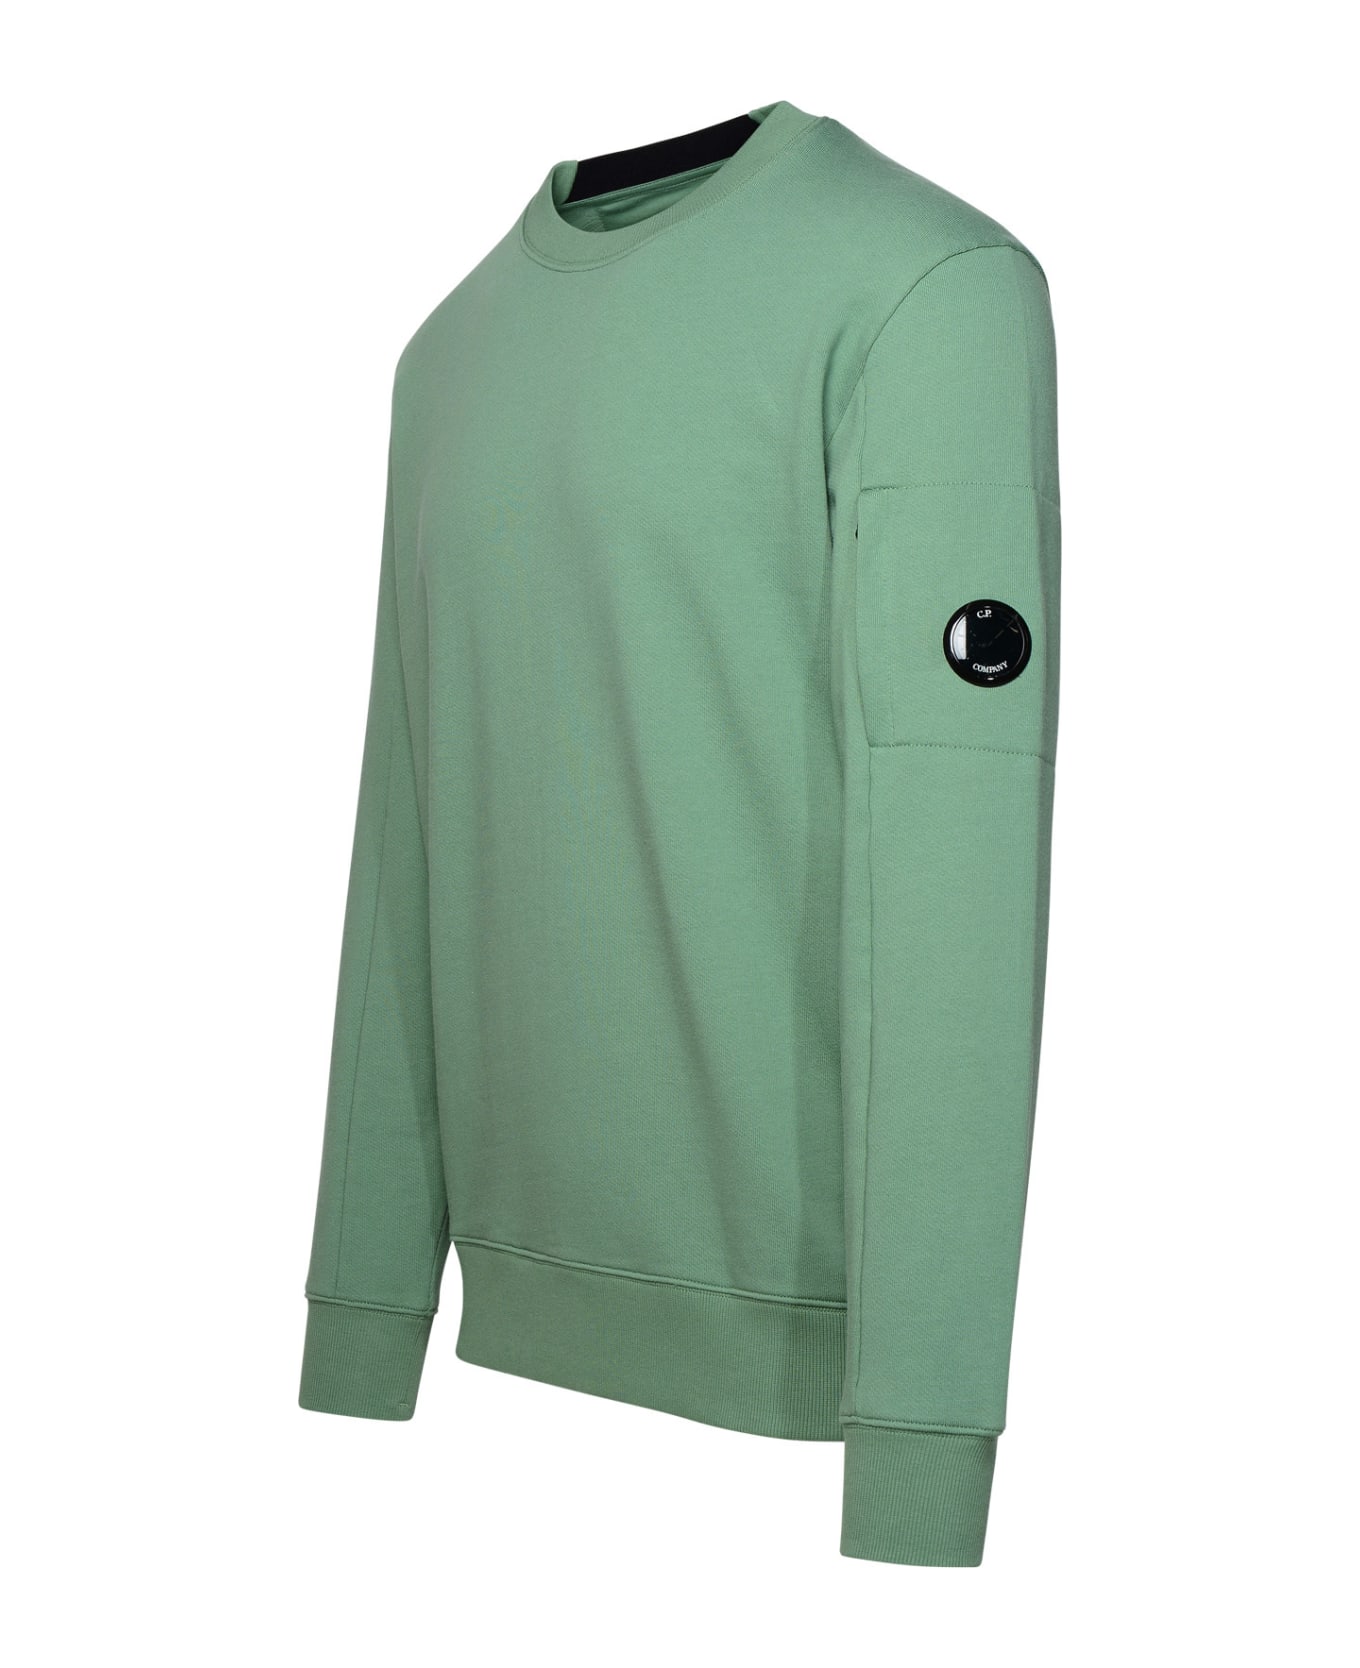 C.P. Company 'diagonal Raised Fleece' Green Cotton Sweatshirt - Verde salvia